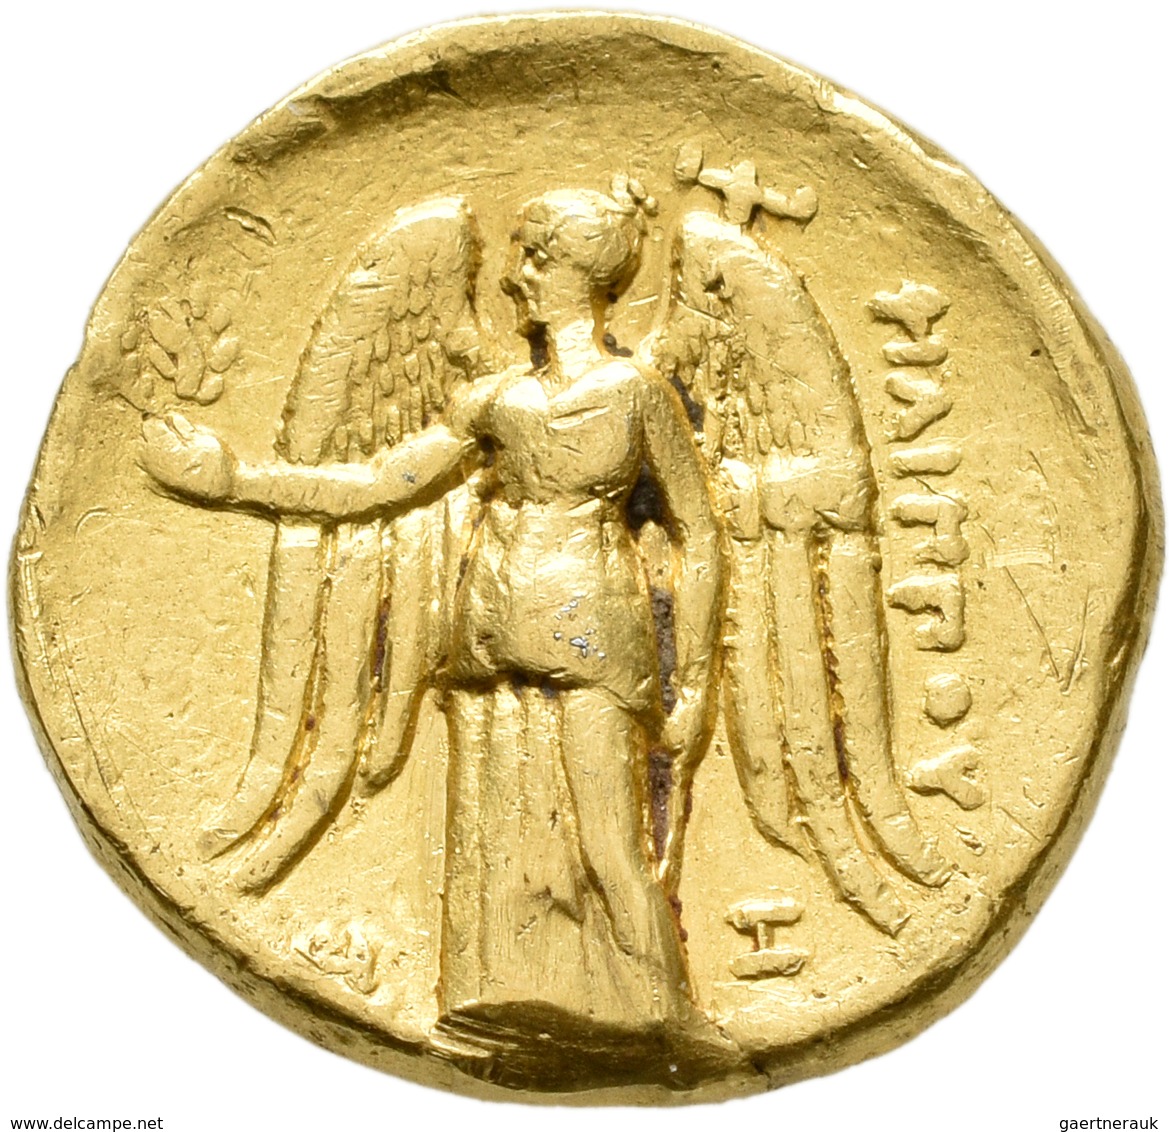 Makedonien - Könige: Philipp III. Arrchidaios 323-317 V.Chr: GOLD Stater, "Arados"? 323-316 V. C., V - Greek